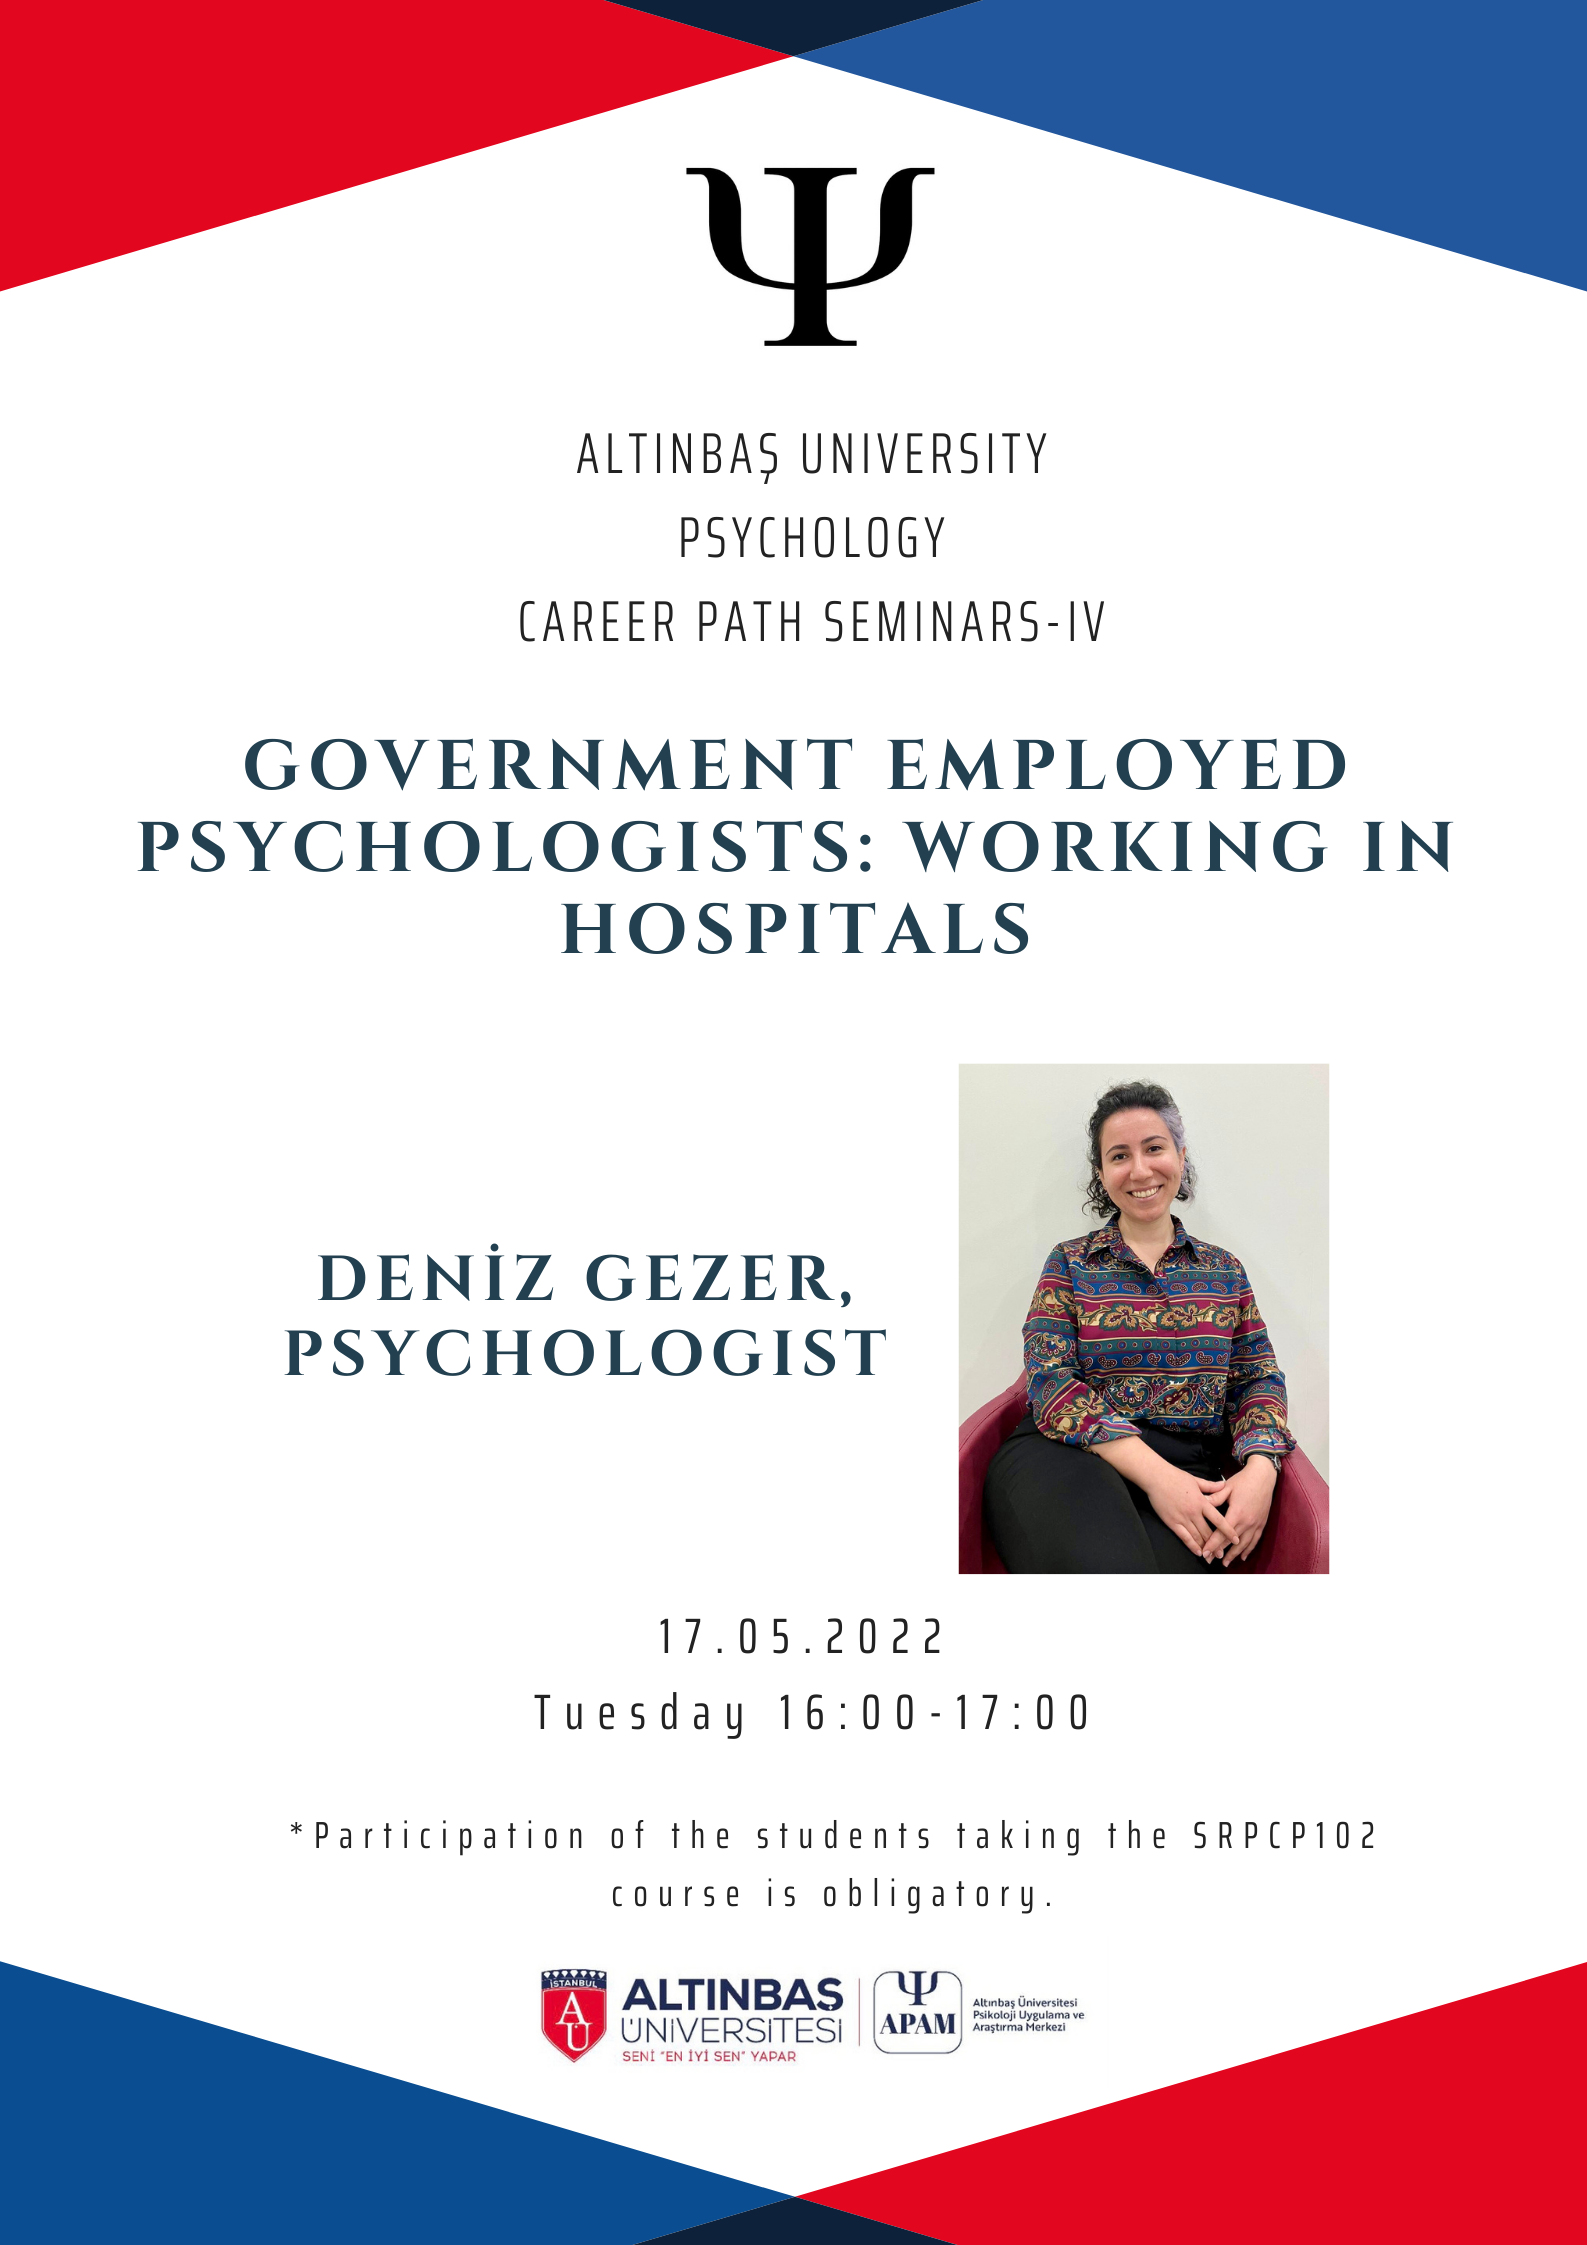 Career Path Seminars IV – Psychologist Deniz Gezer